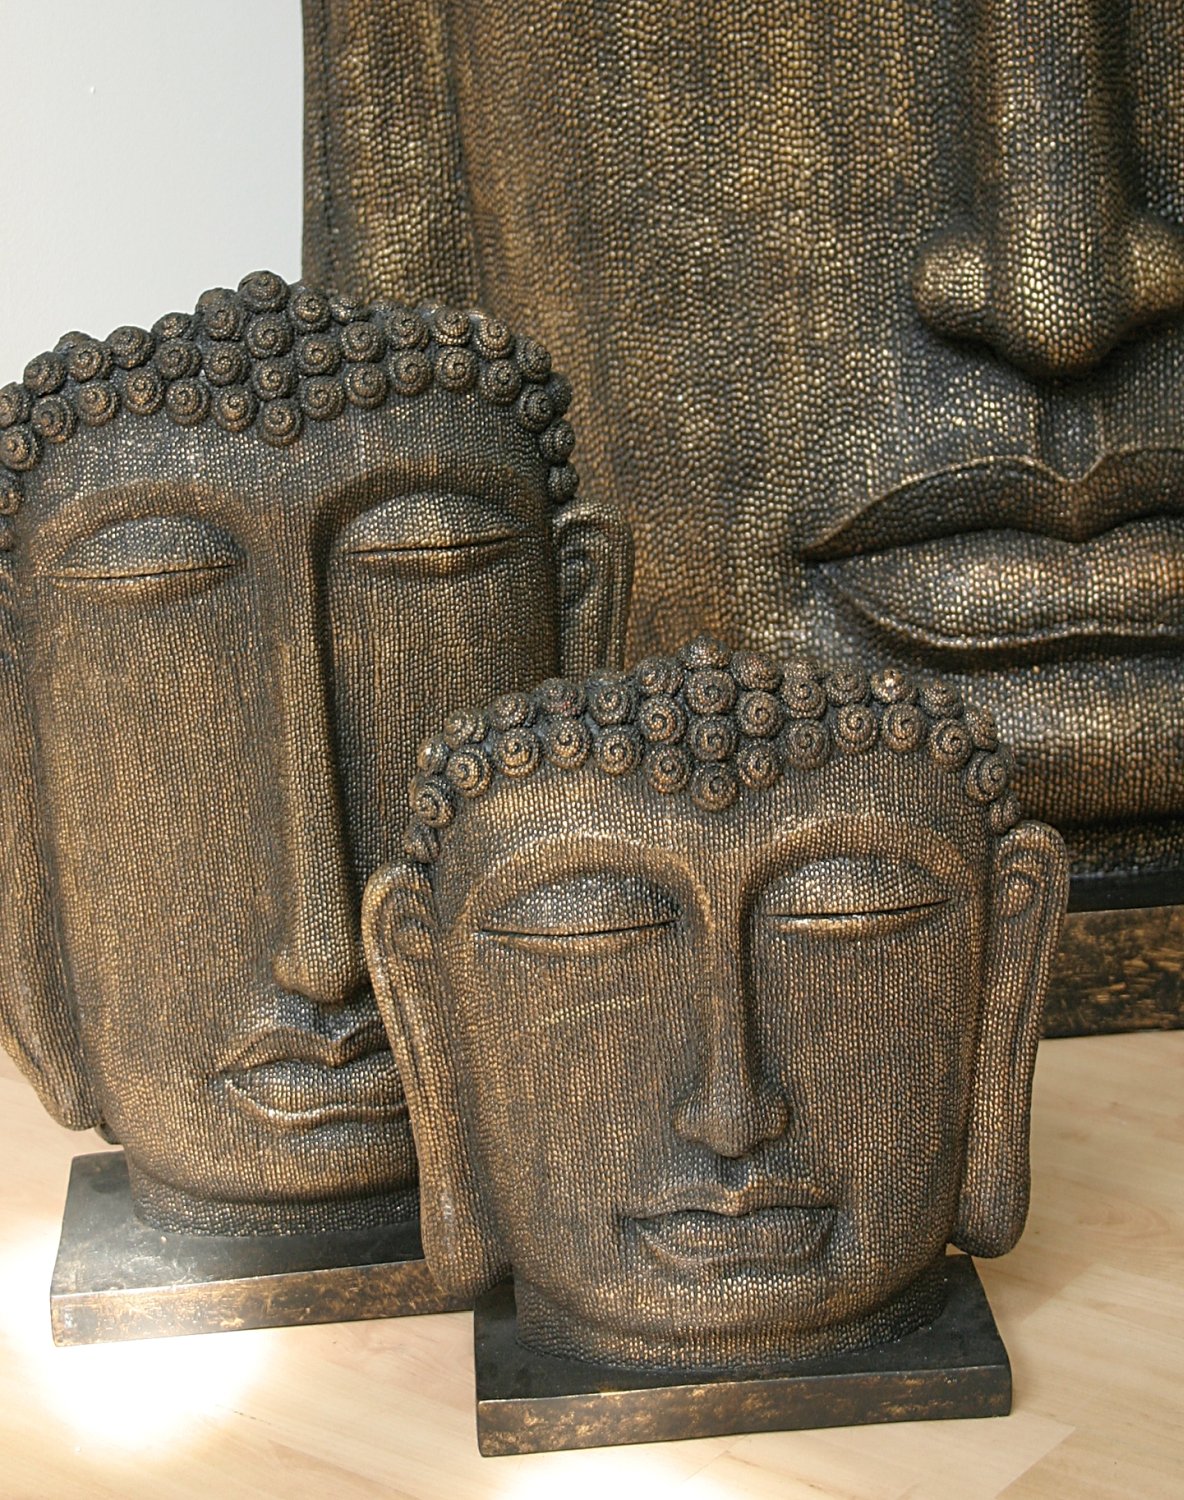 Deko Buddhakopf aus Fiberglas, 93 x 75 x 28 cm, braun